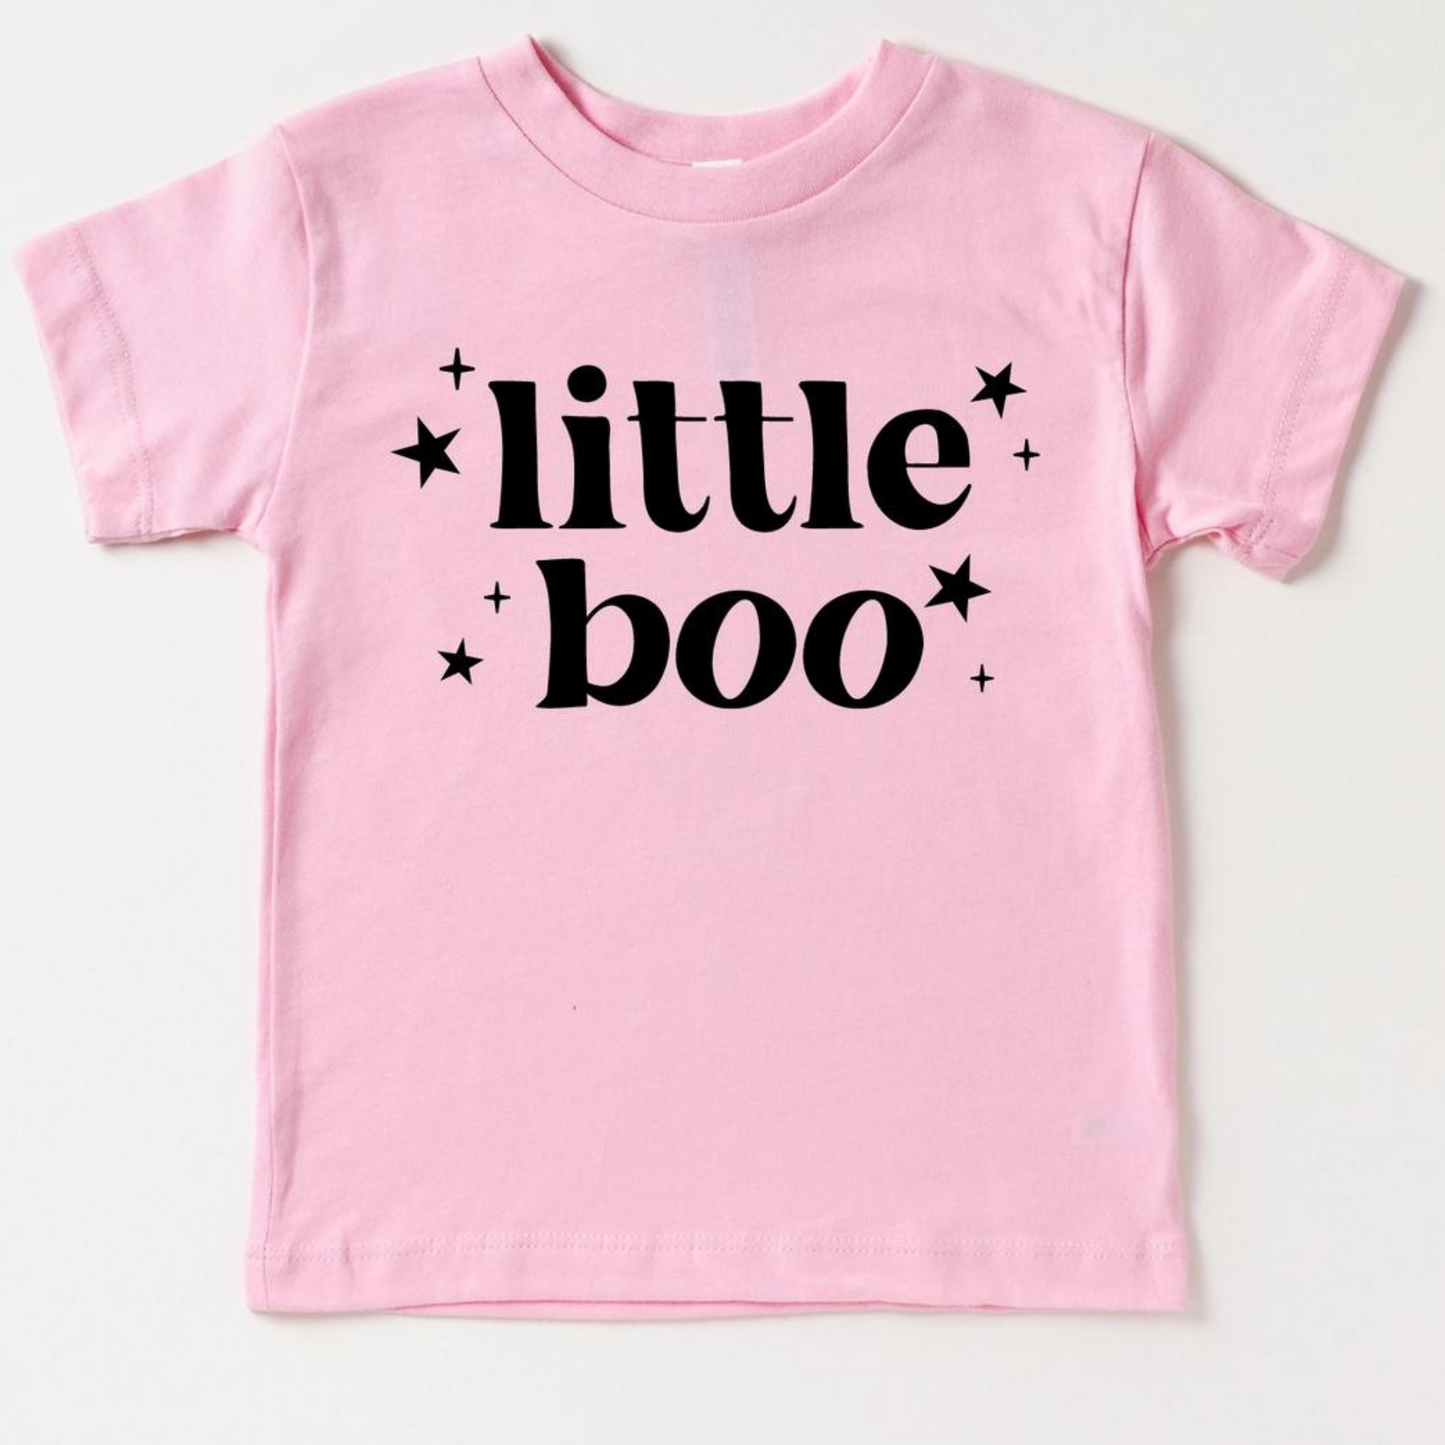 Kid's Graphic Short Sleeve Tee, Little Boo / Pink